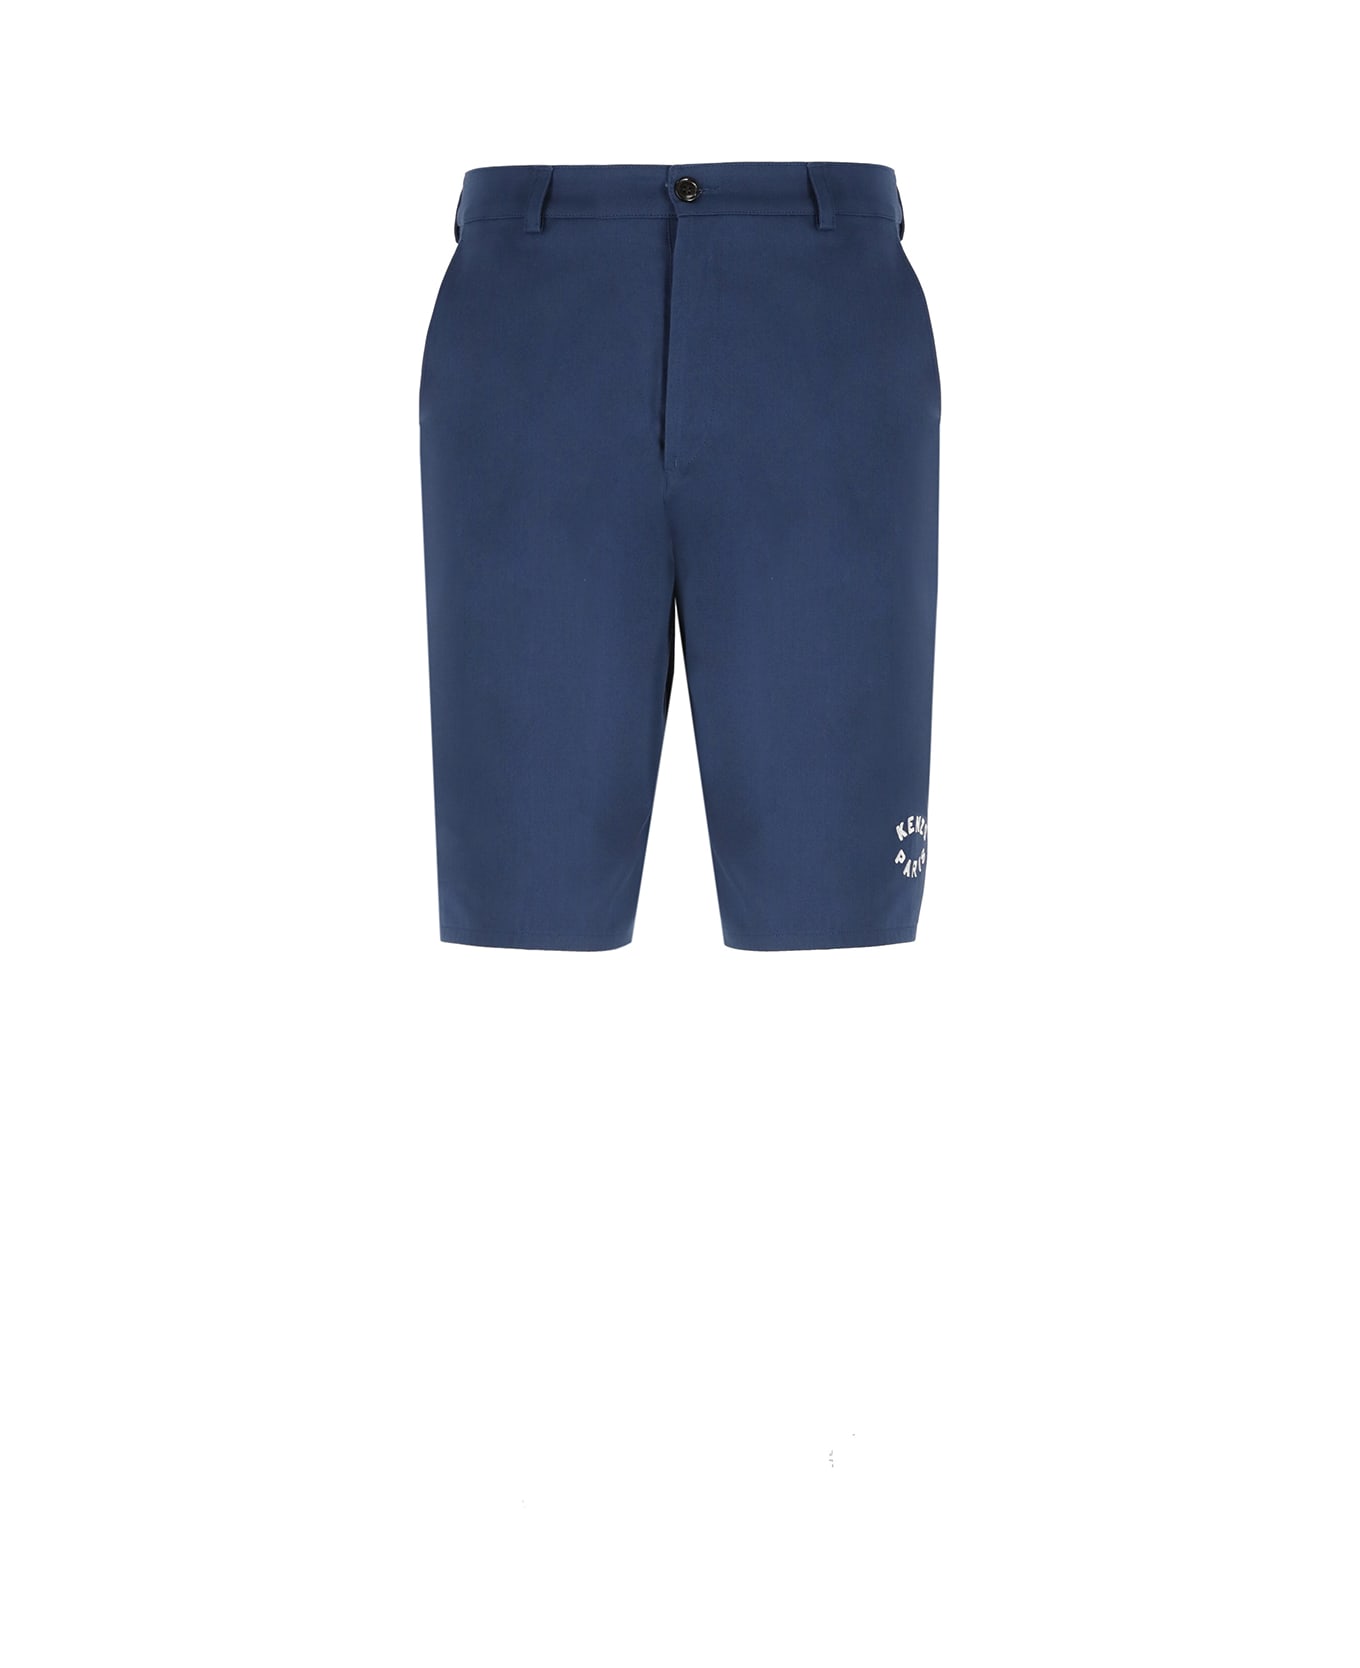 Kenzo Logo Patch Bermuda Shorts - Blue